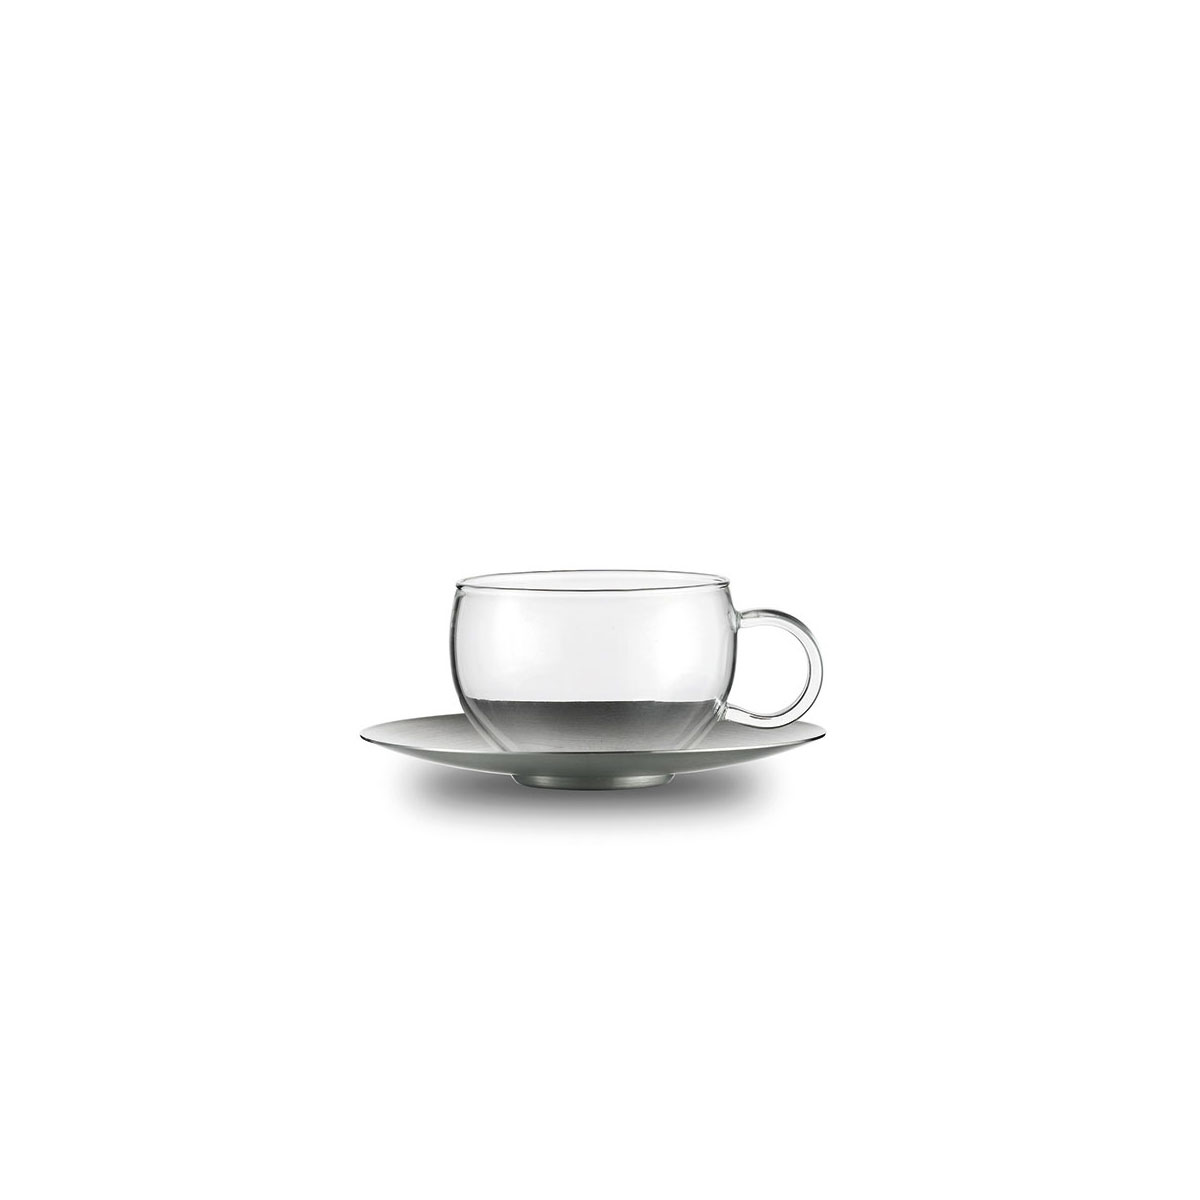 Jenaer Glas Good Mood Tea Cup With Saucer Set